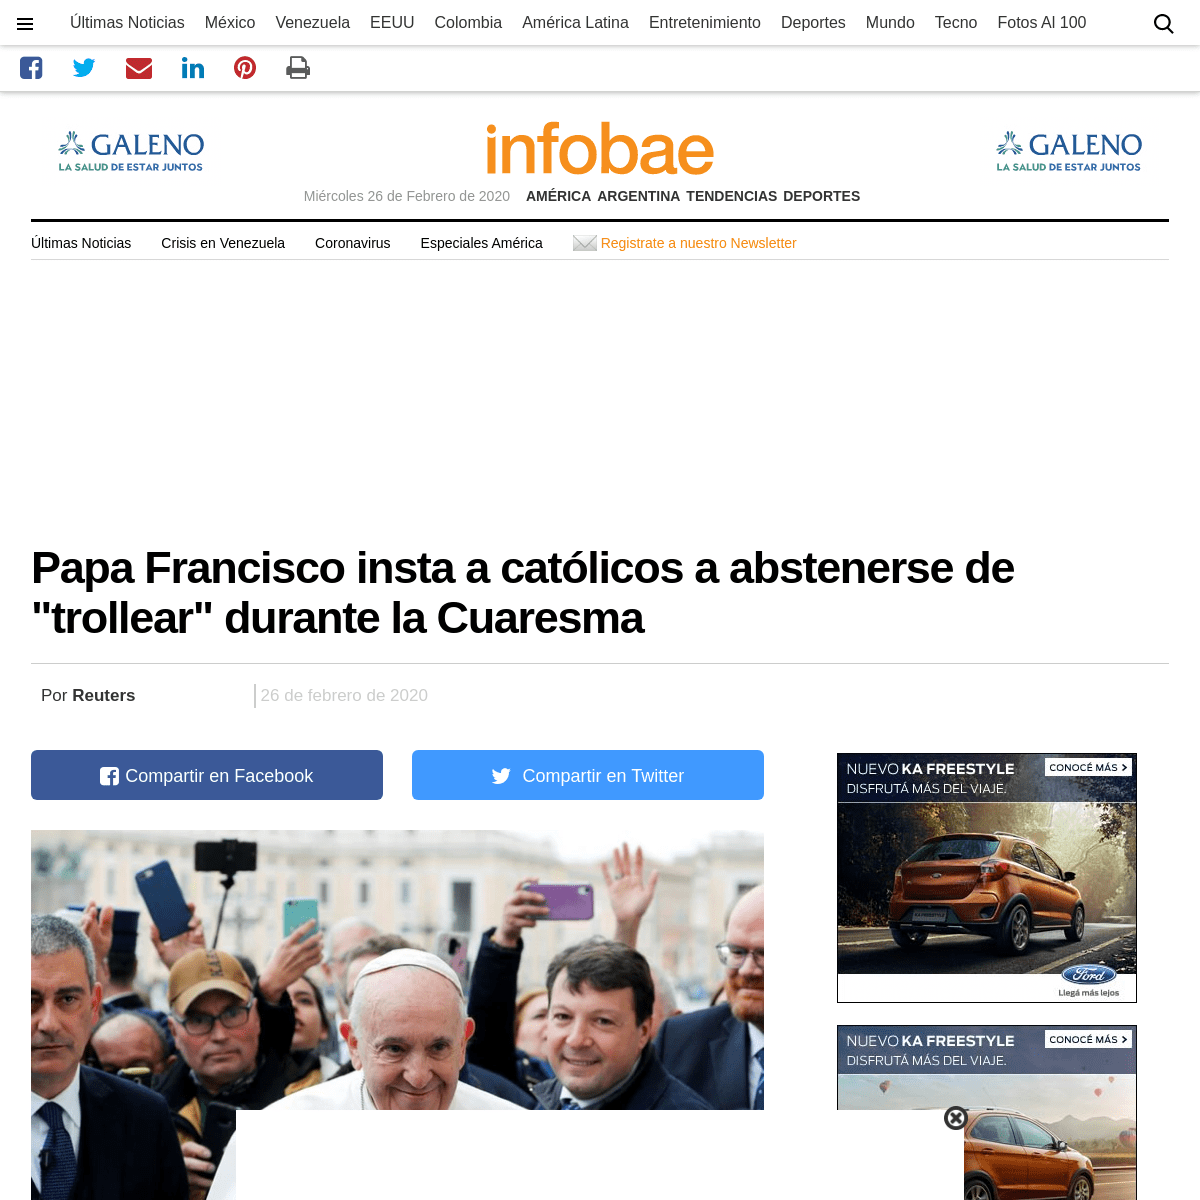 A complete backup of www.infobae.com/america/agencias/2020/02/26/papa-francisco-insta-a-catolicos-a-abstenerse-de-trollear-duran